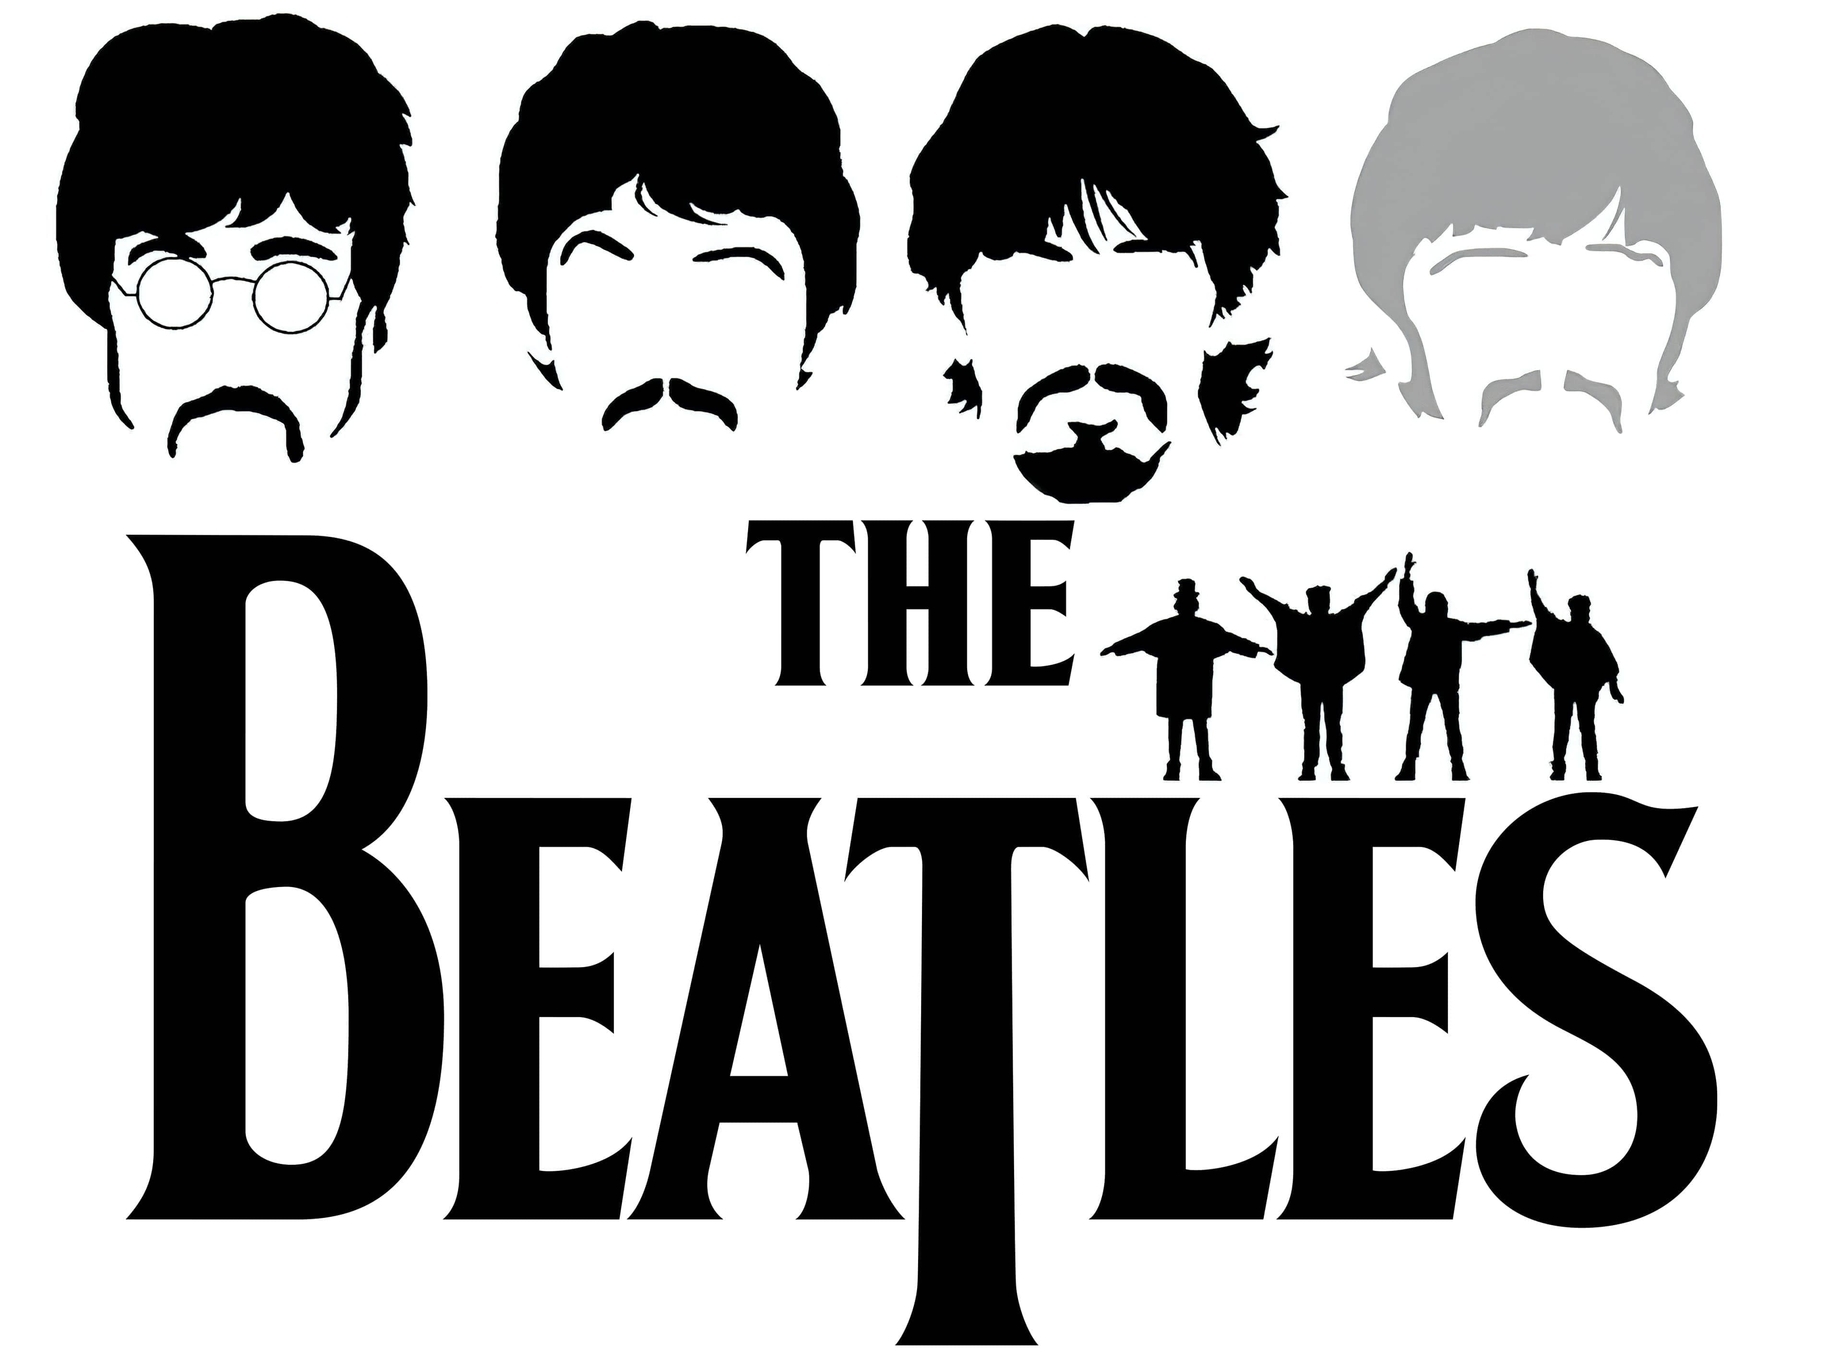 Beatles logo